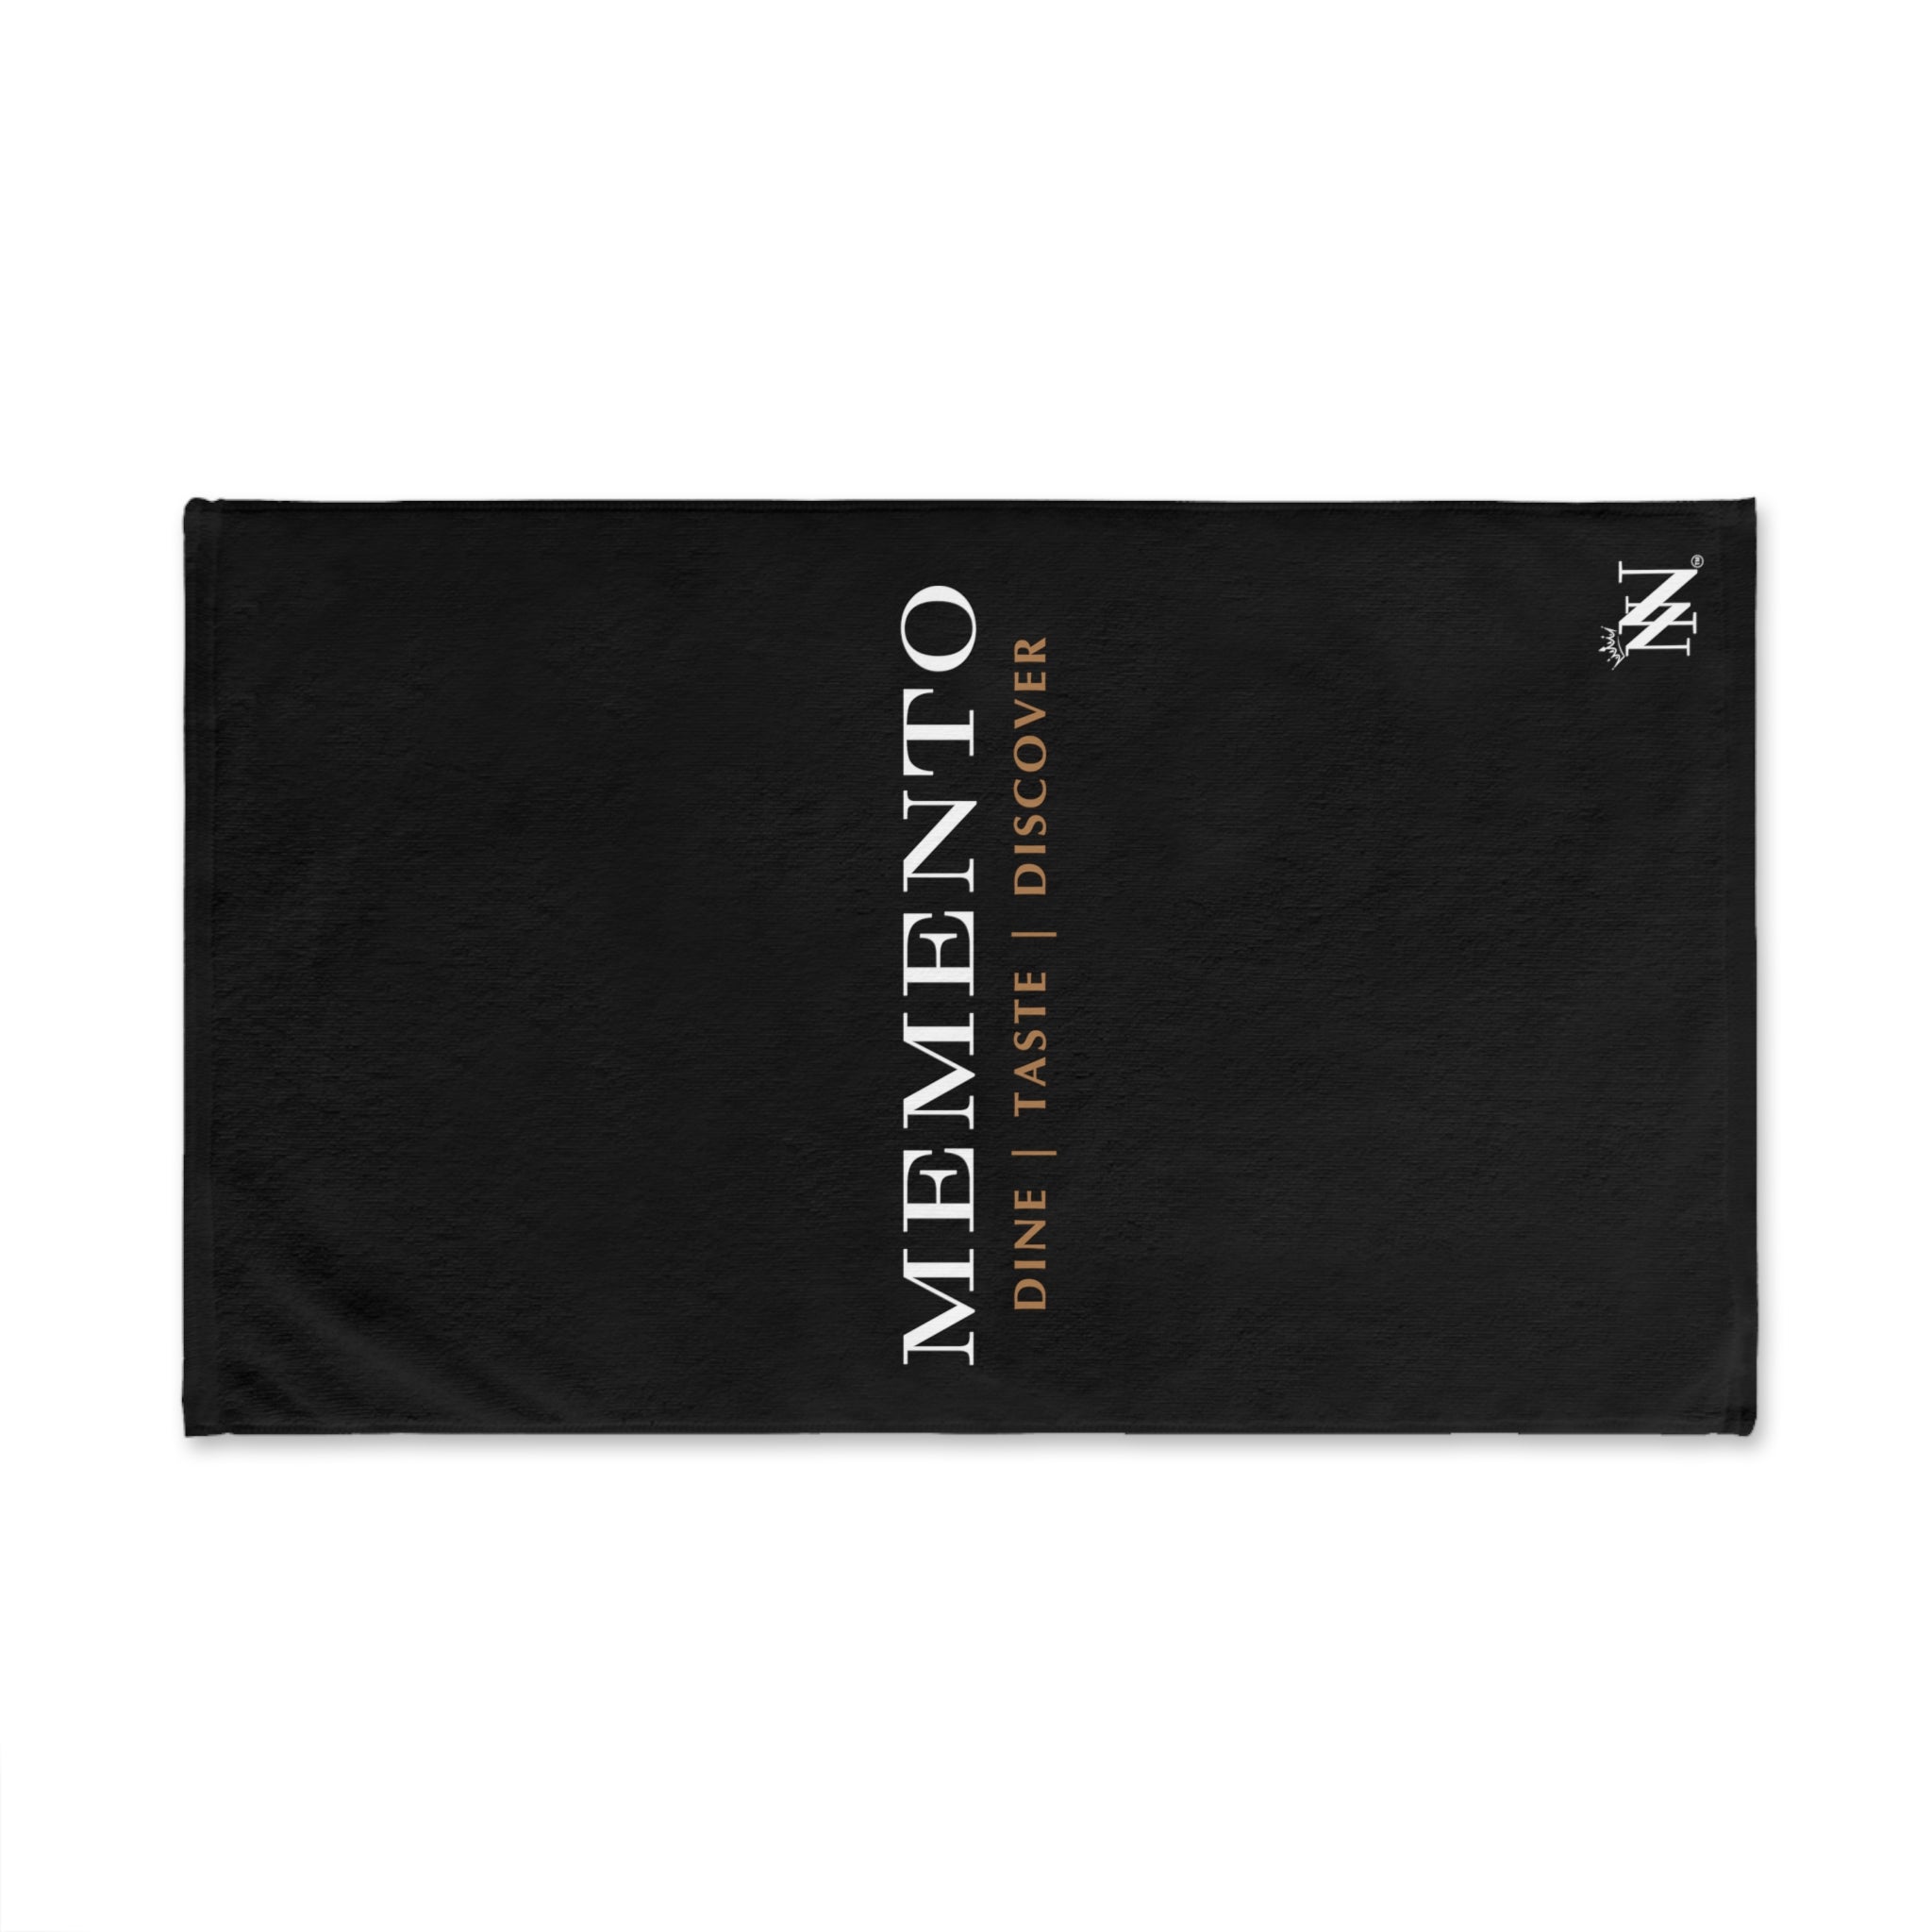 Memento sex towel